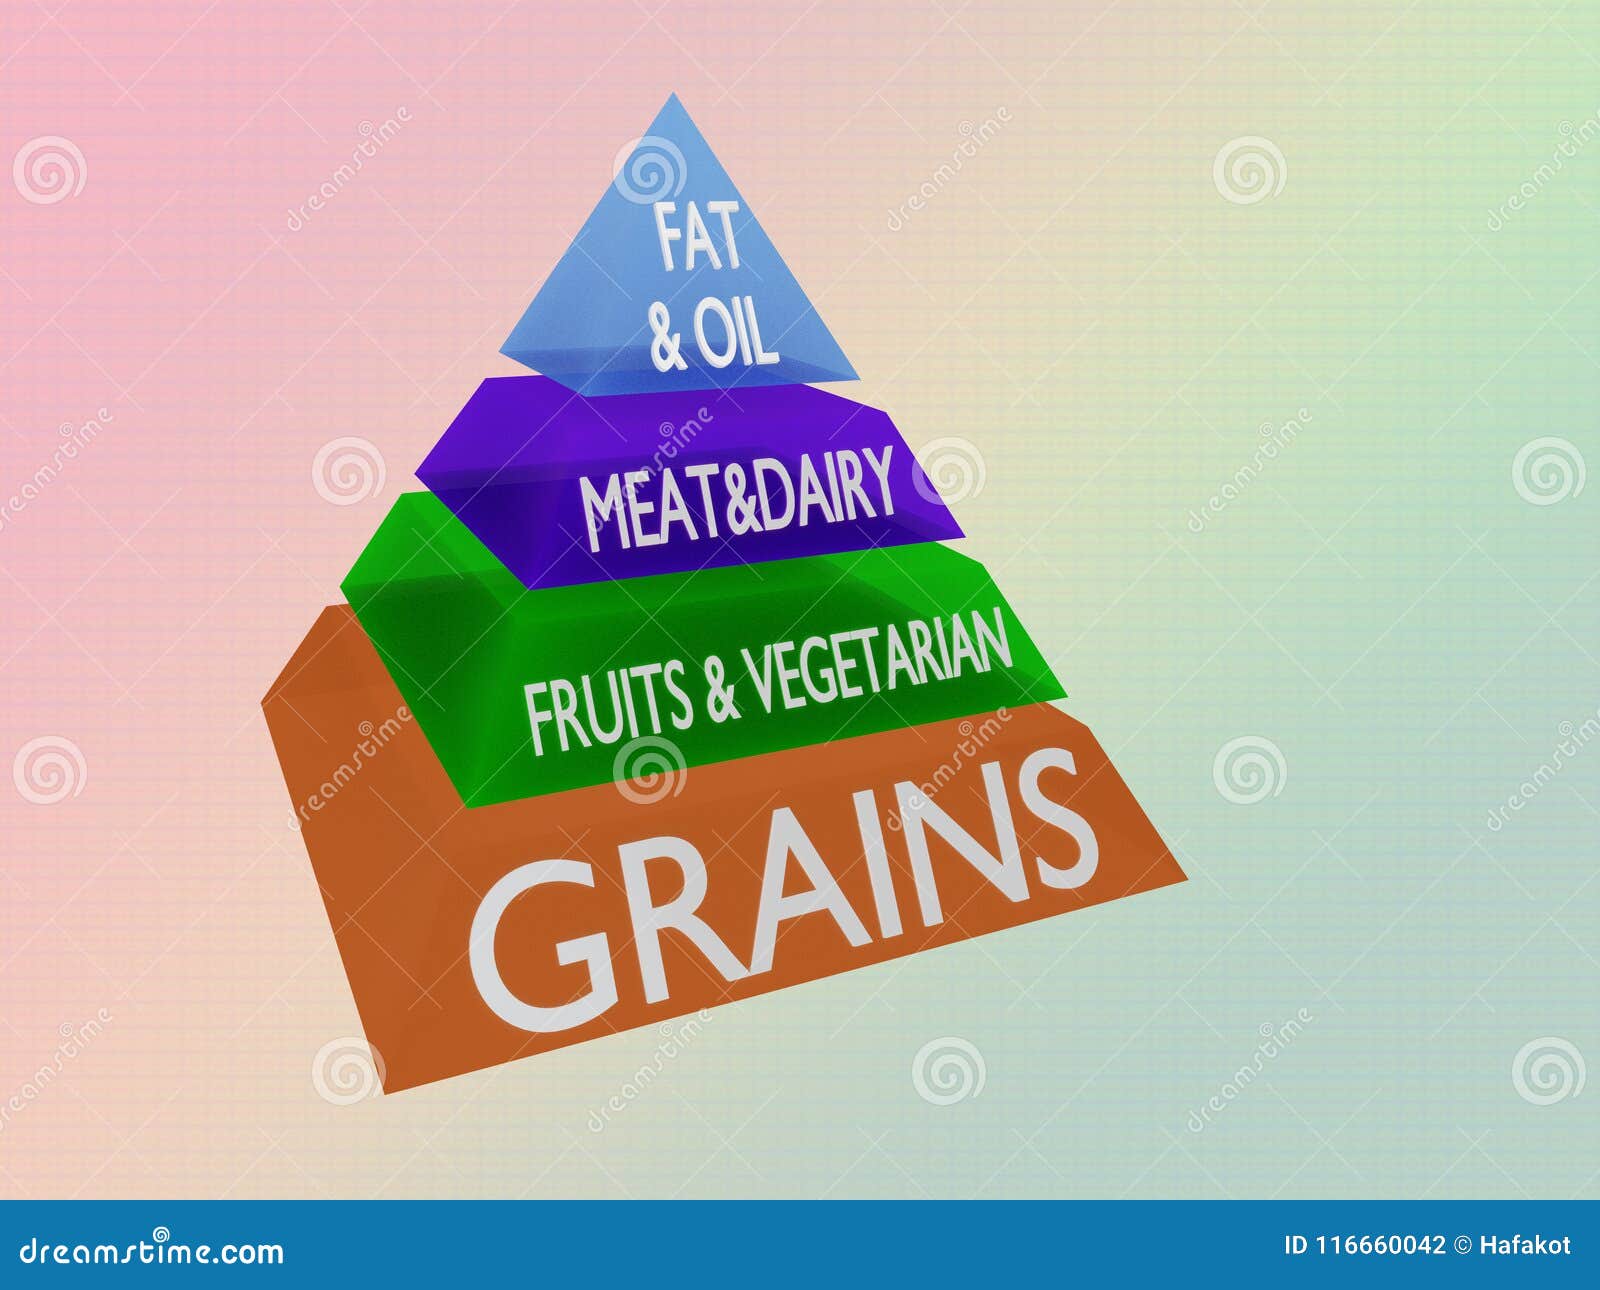 Food Pyramid Concept Stock Illustration Illustration Of Fats